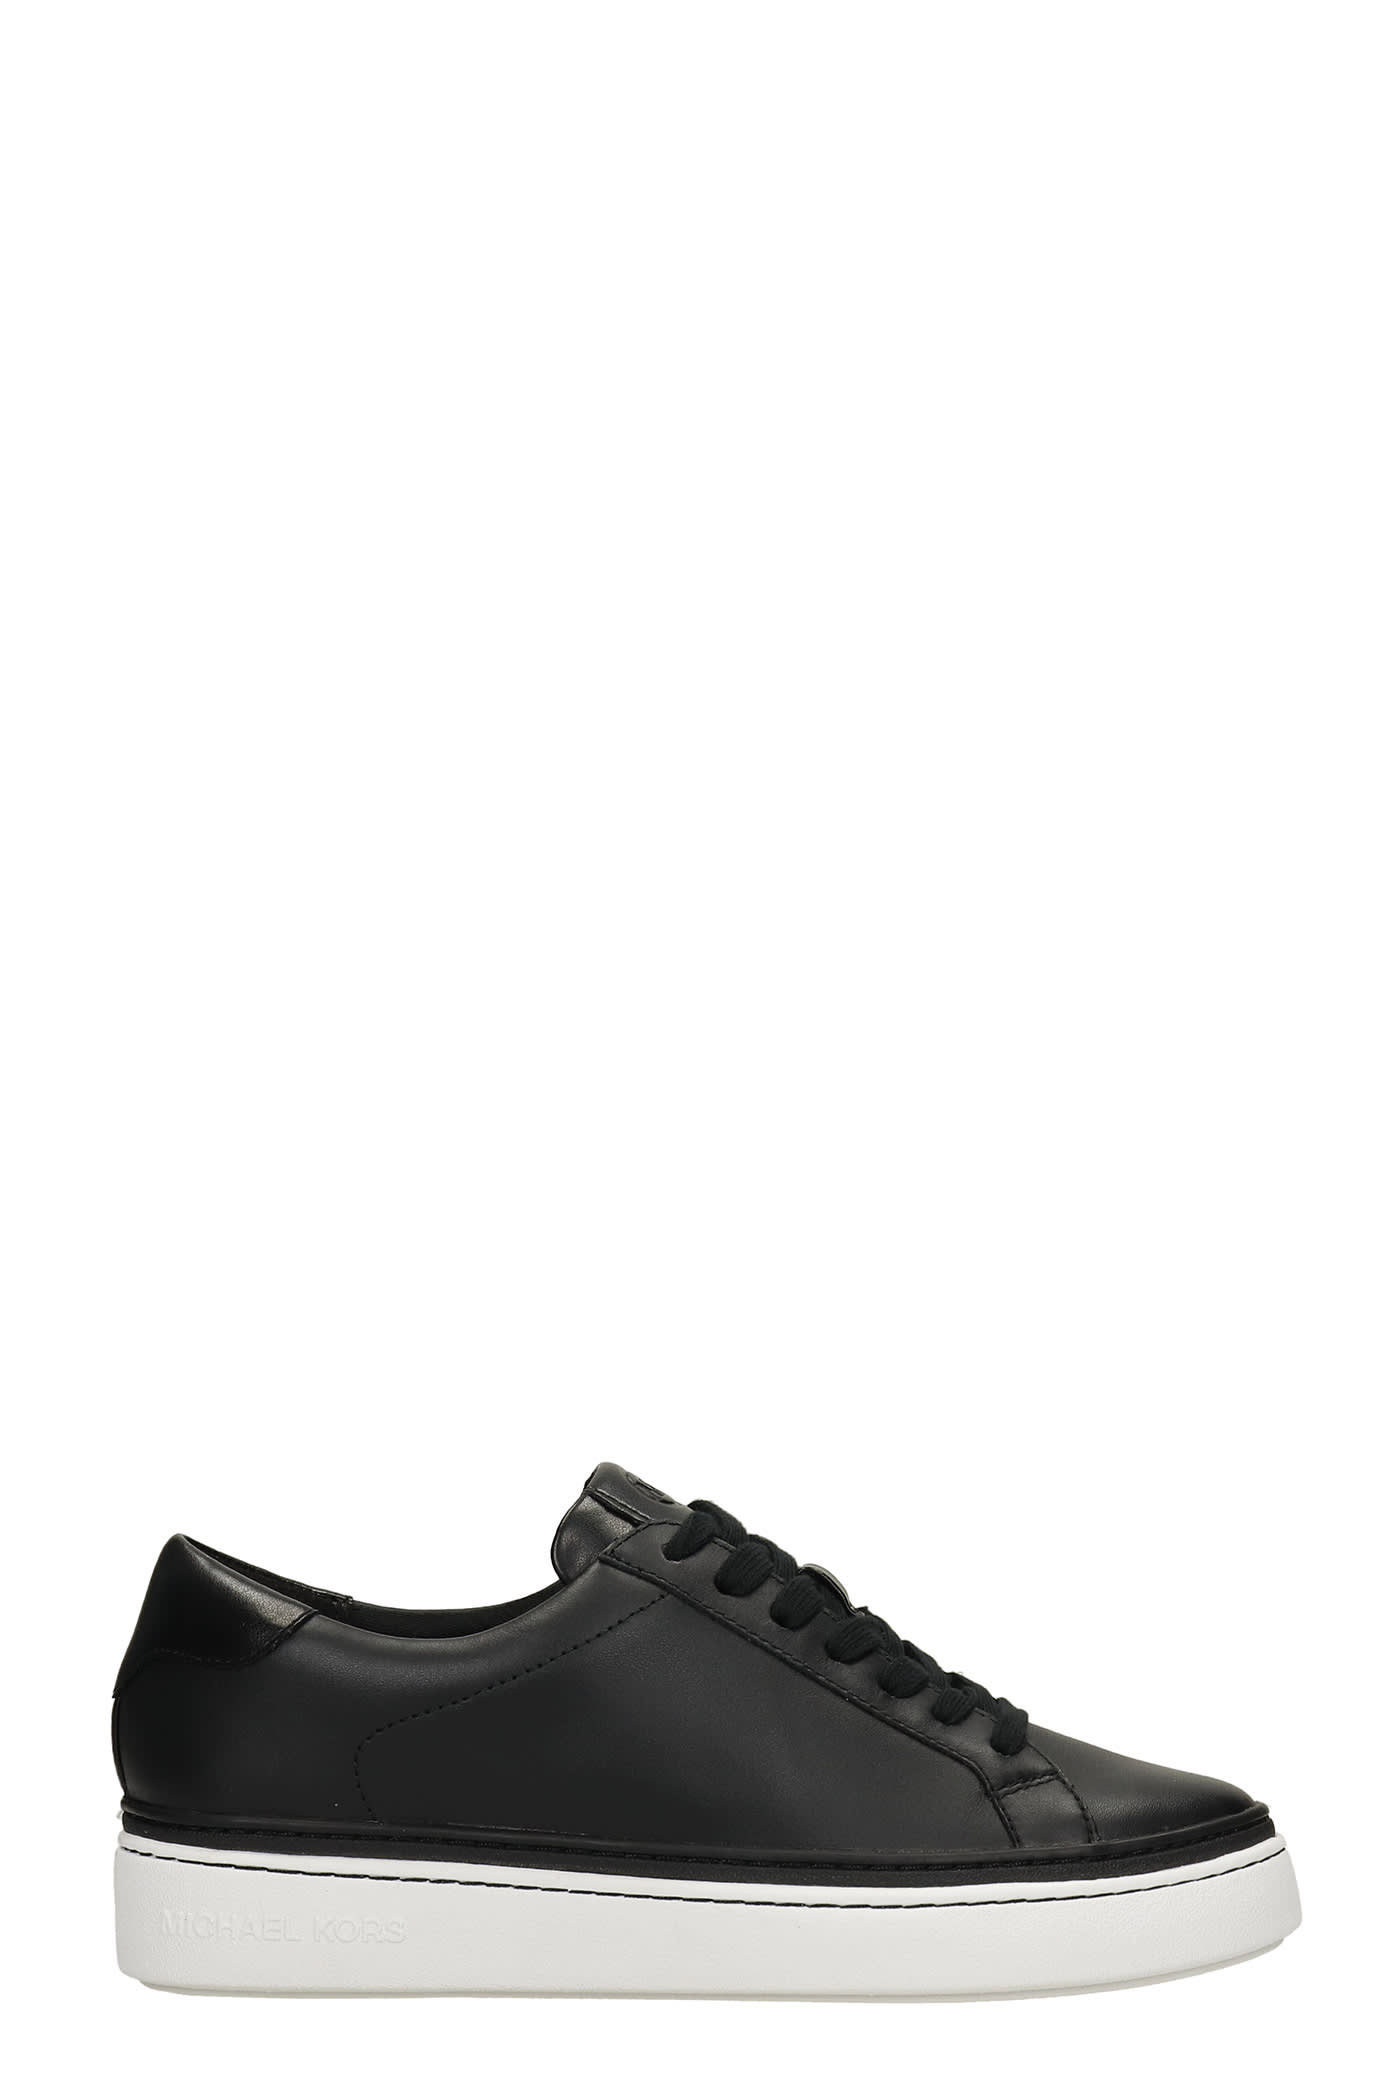 Michael Kors Chapman Sneakers In Black Leather